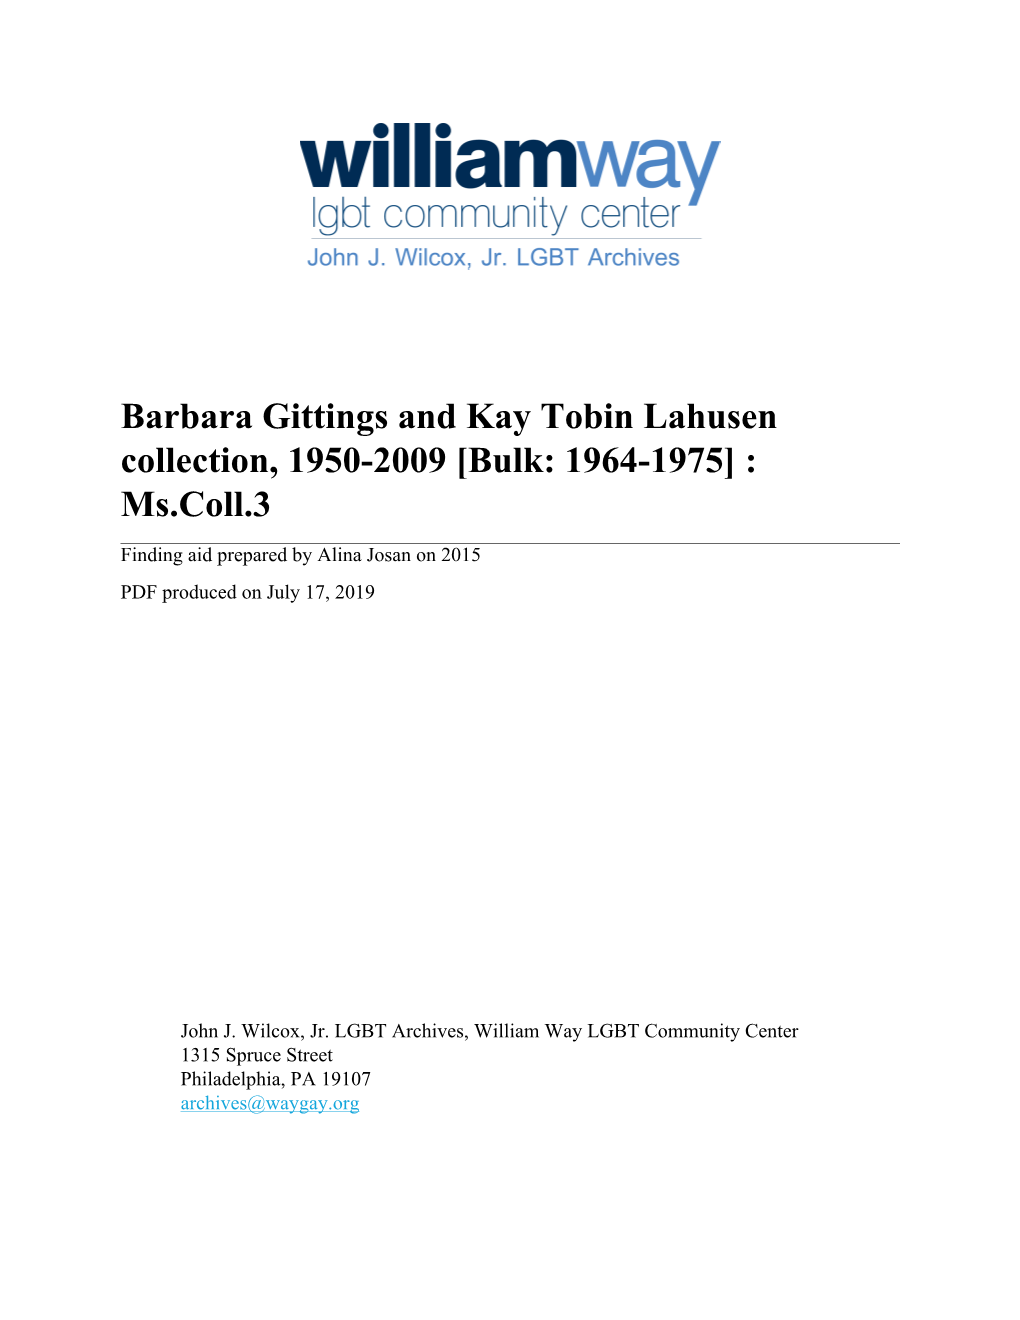 Barbara Gittings and Kay Tobin Lahusen Collection, 1950-2009 [Bulk: 1964-1975] : Ms.Coll.3